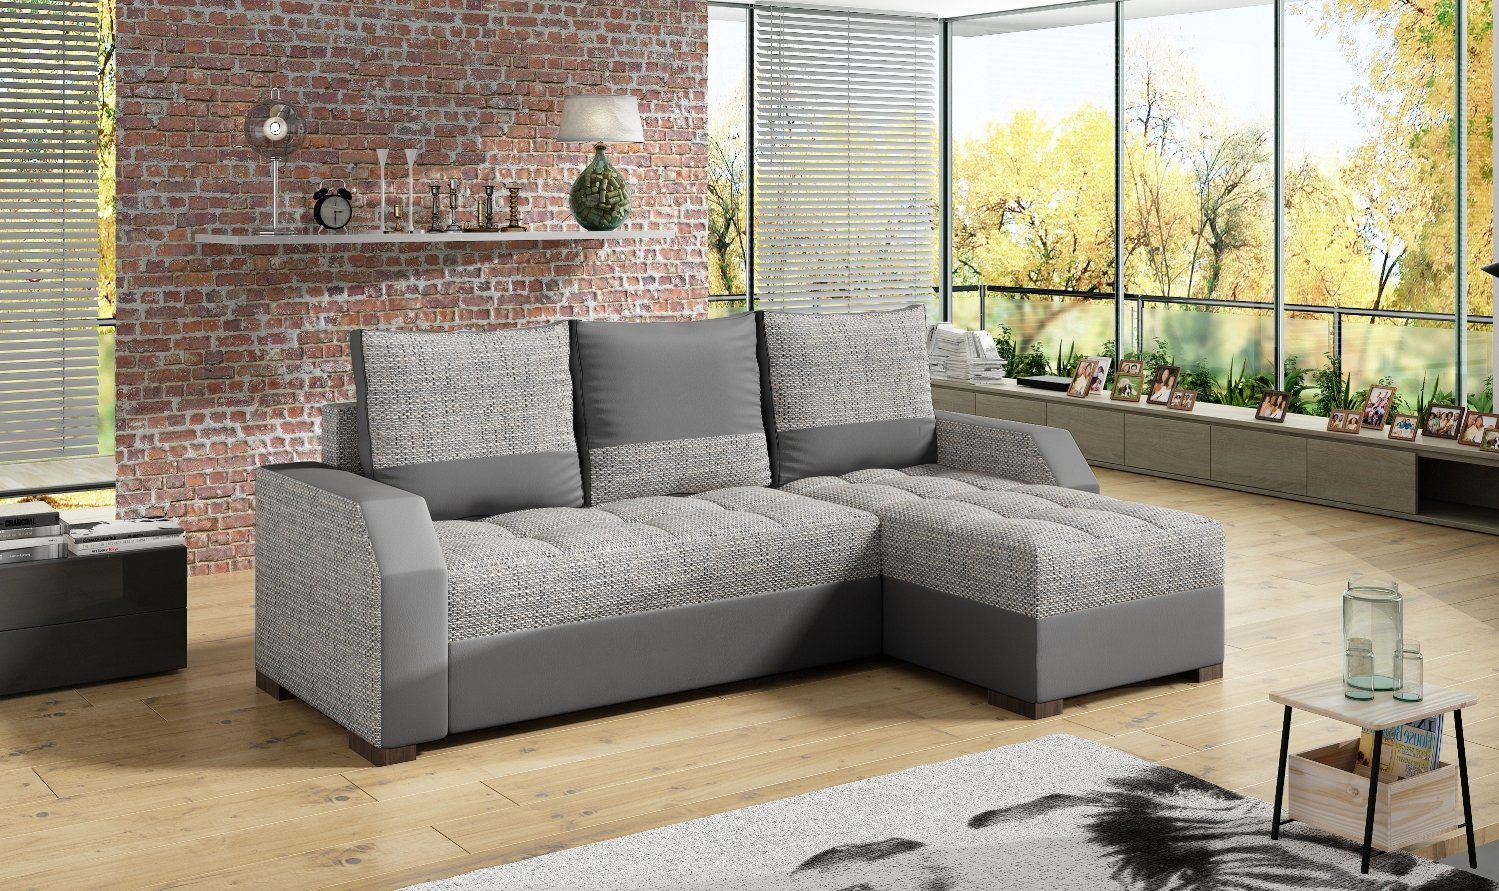 JVmoebel Ecksofa, Design Ecksofa Bettfunktion Couch Leder Textil Polster Sofas Couchen Grau